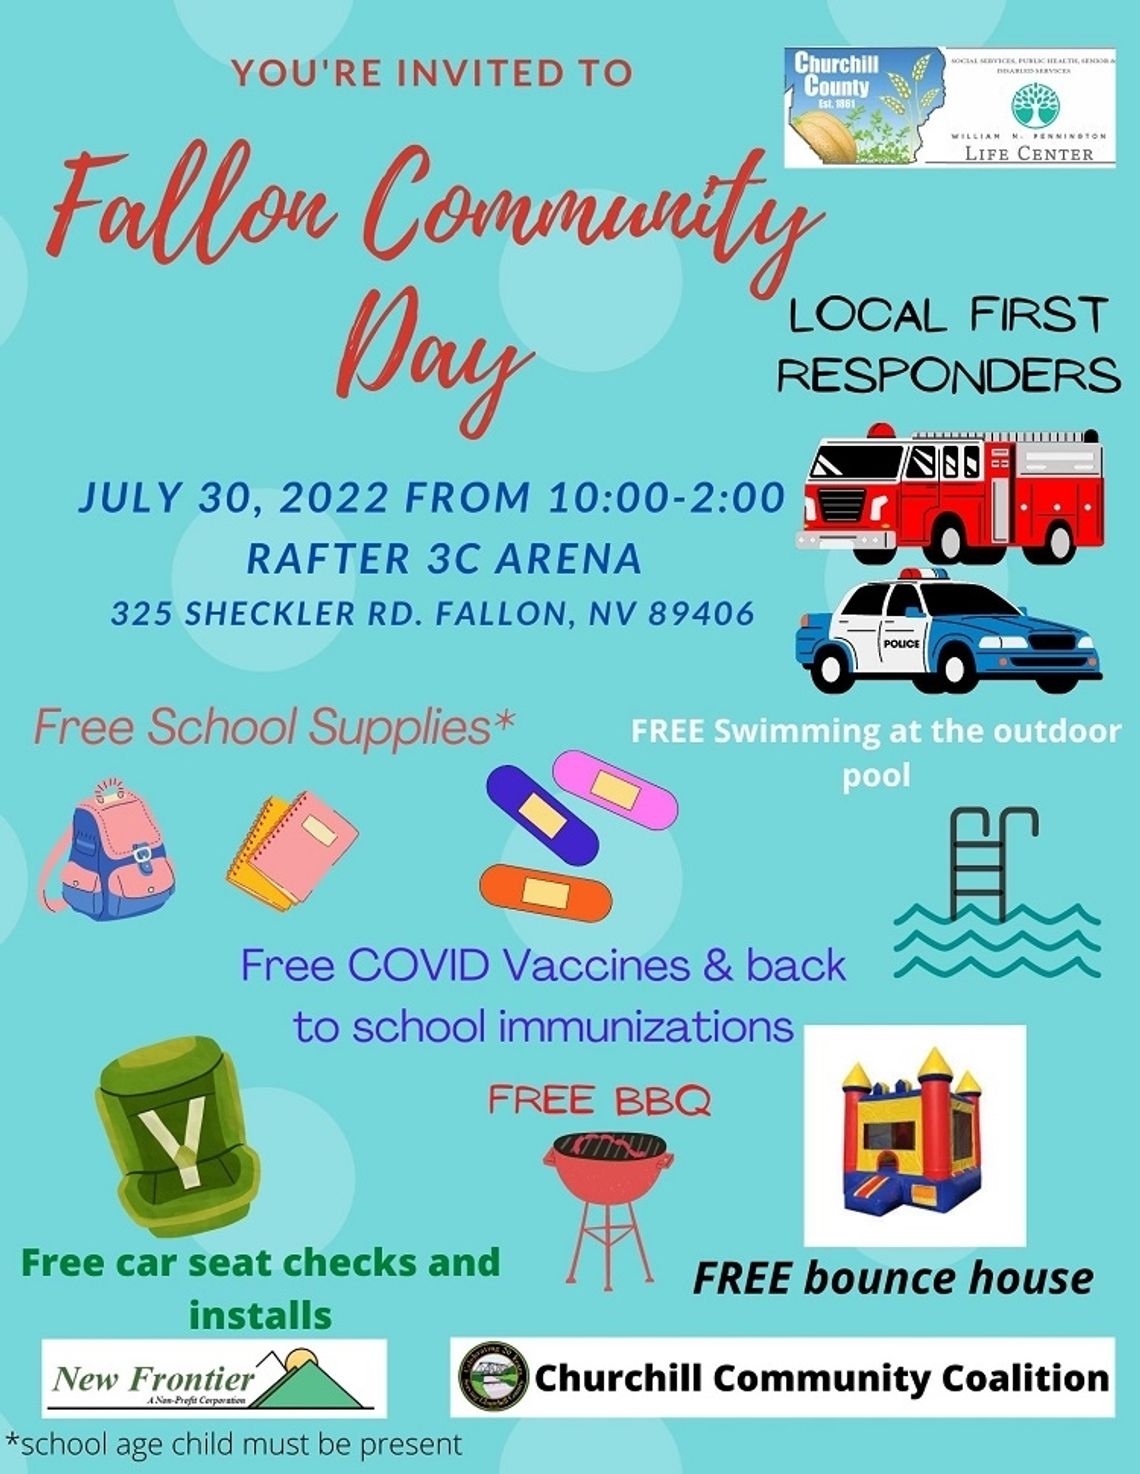 Fallon Community Day Scheduled